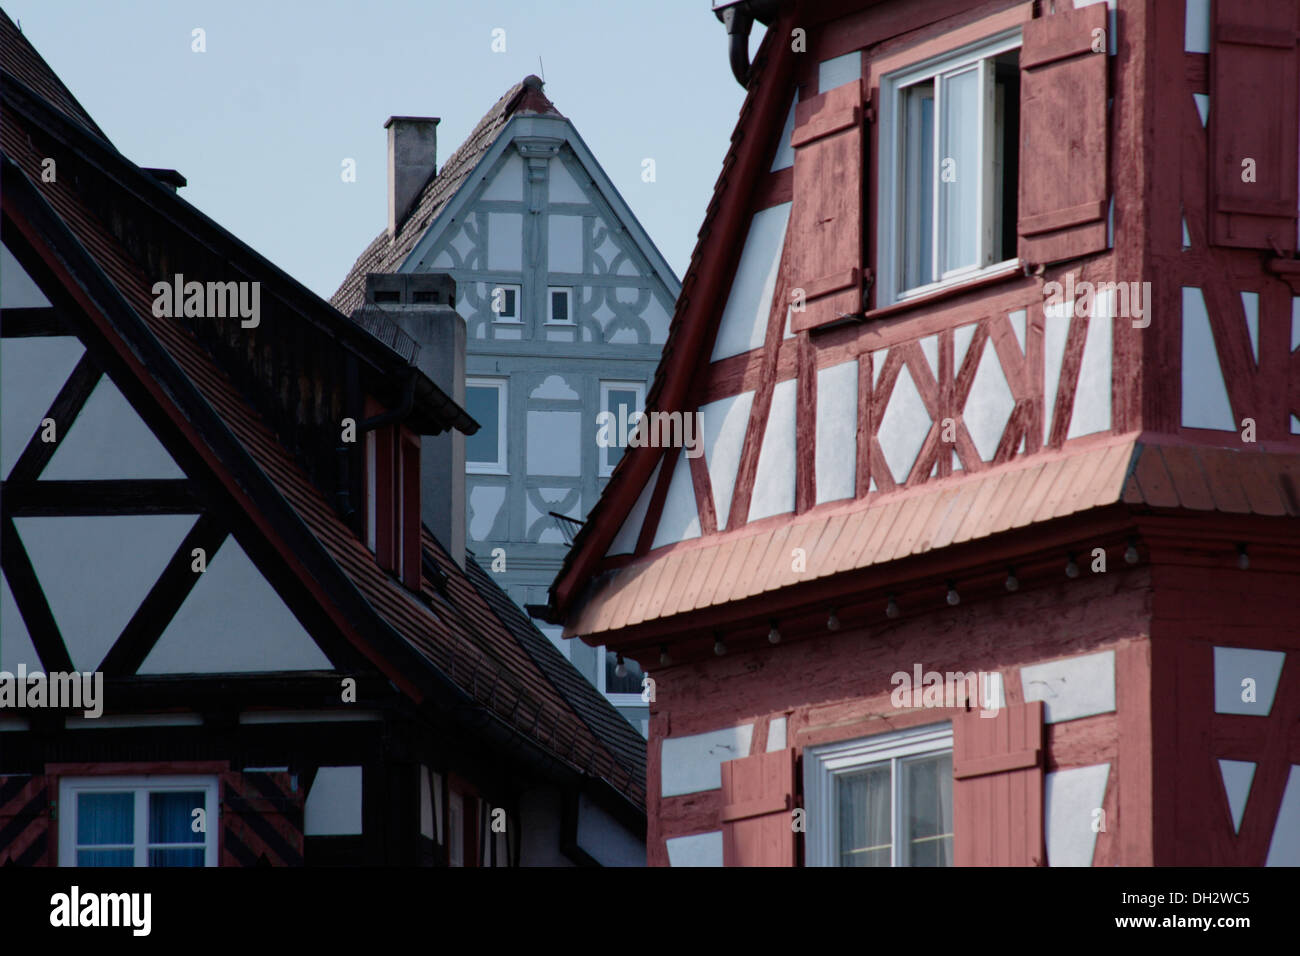 Allemagne, Bade-Wurtemberg, Waiblingen, maison, pignons, fenêtres, Deutschland, Haus, Giebel, Fenster Banque D'Images